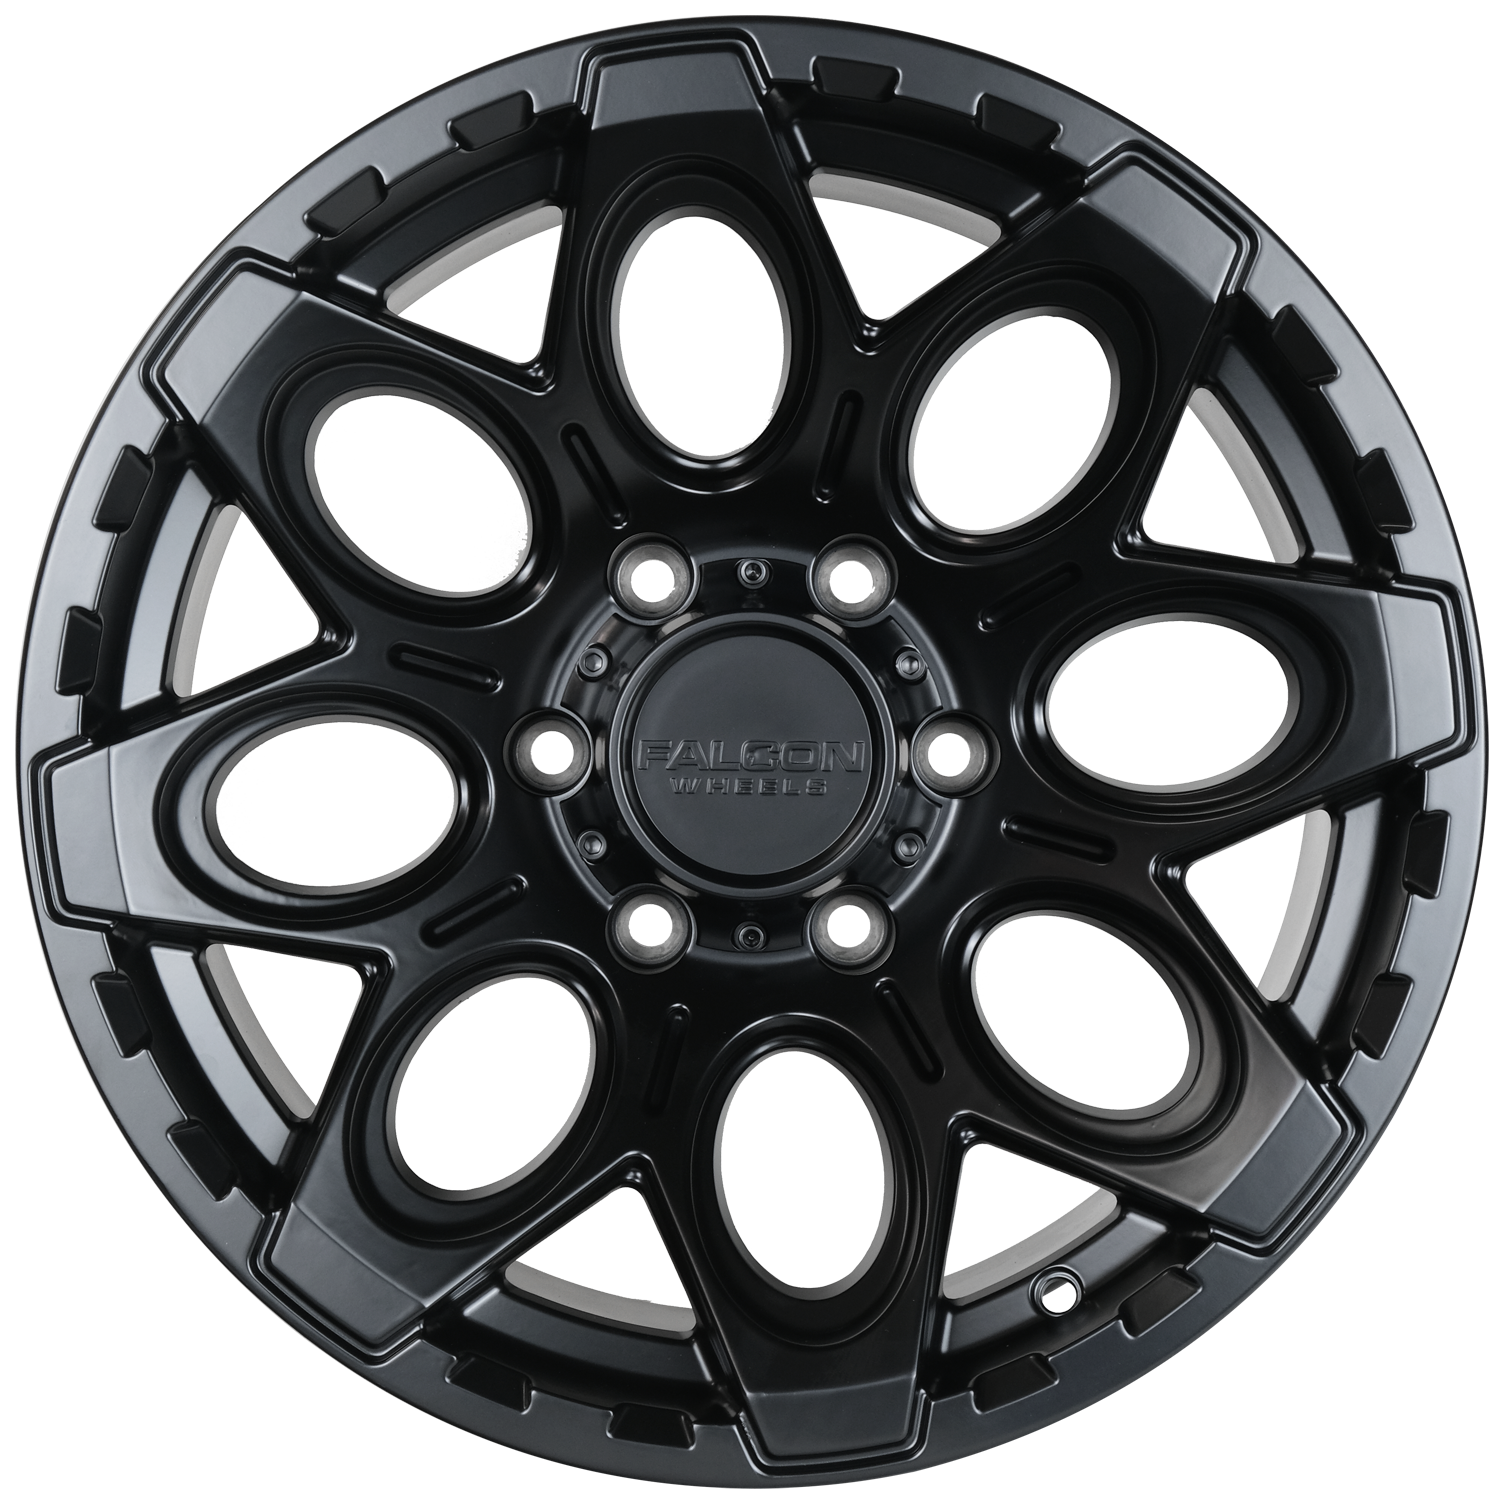 T6 - Matte Black 17x9 - Premium Wheels from Falcon Off-Road Wheels - Just $270! Shop now at Falcon Off-Road Wheels 